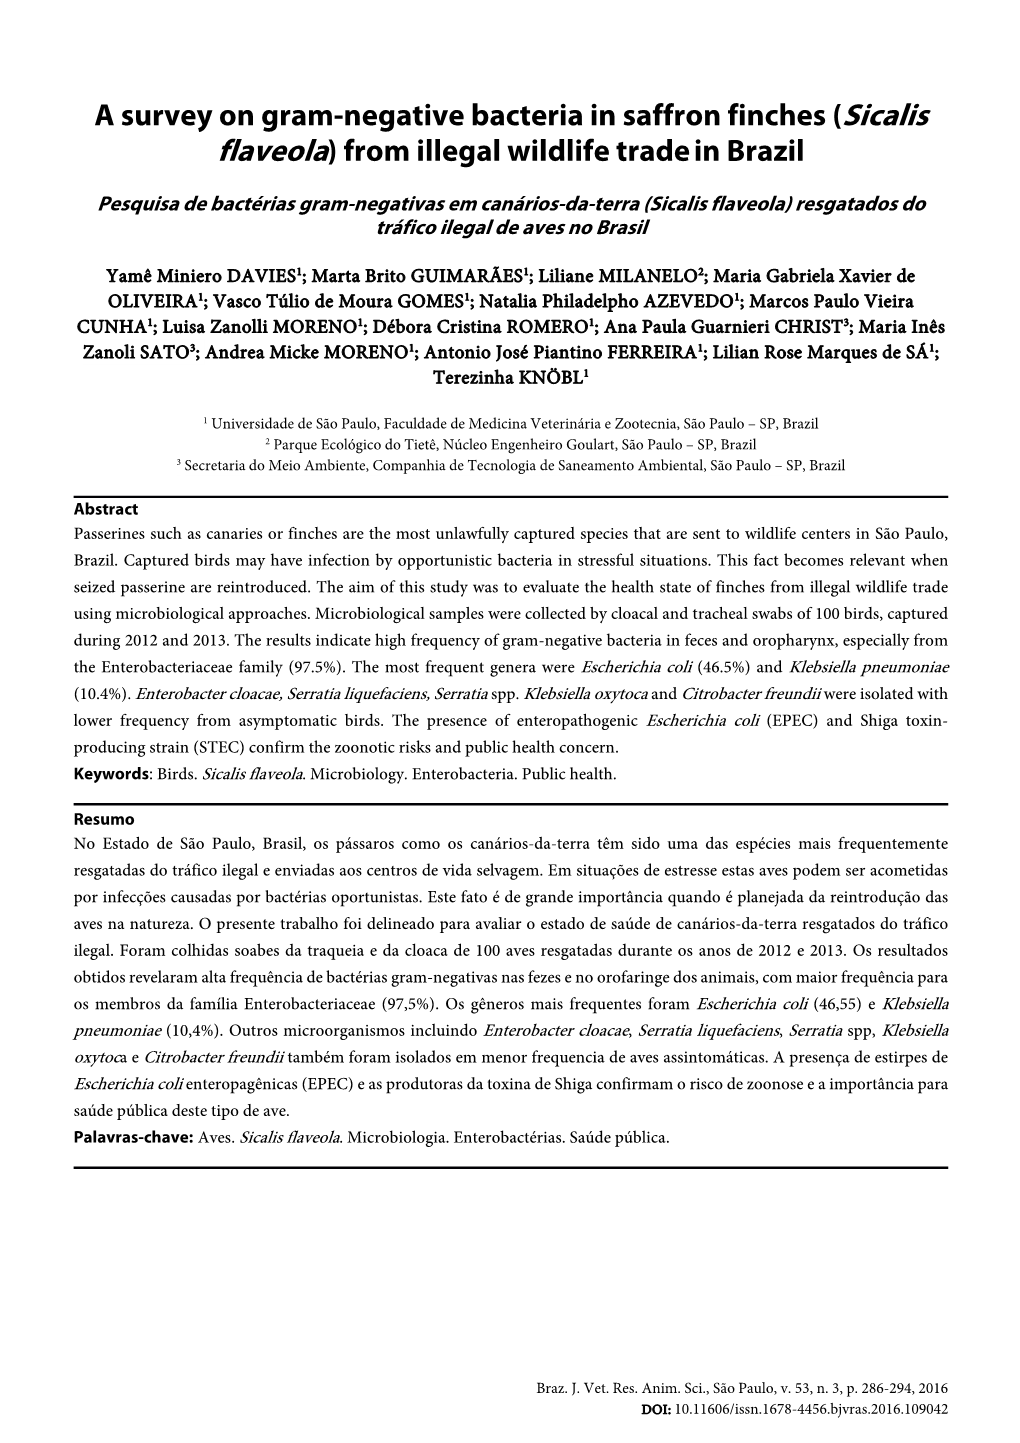 A Survey on Gram-Negative Bacteria in Saffron Finches (Sicalis Flaveola)